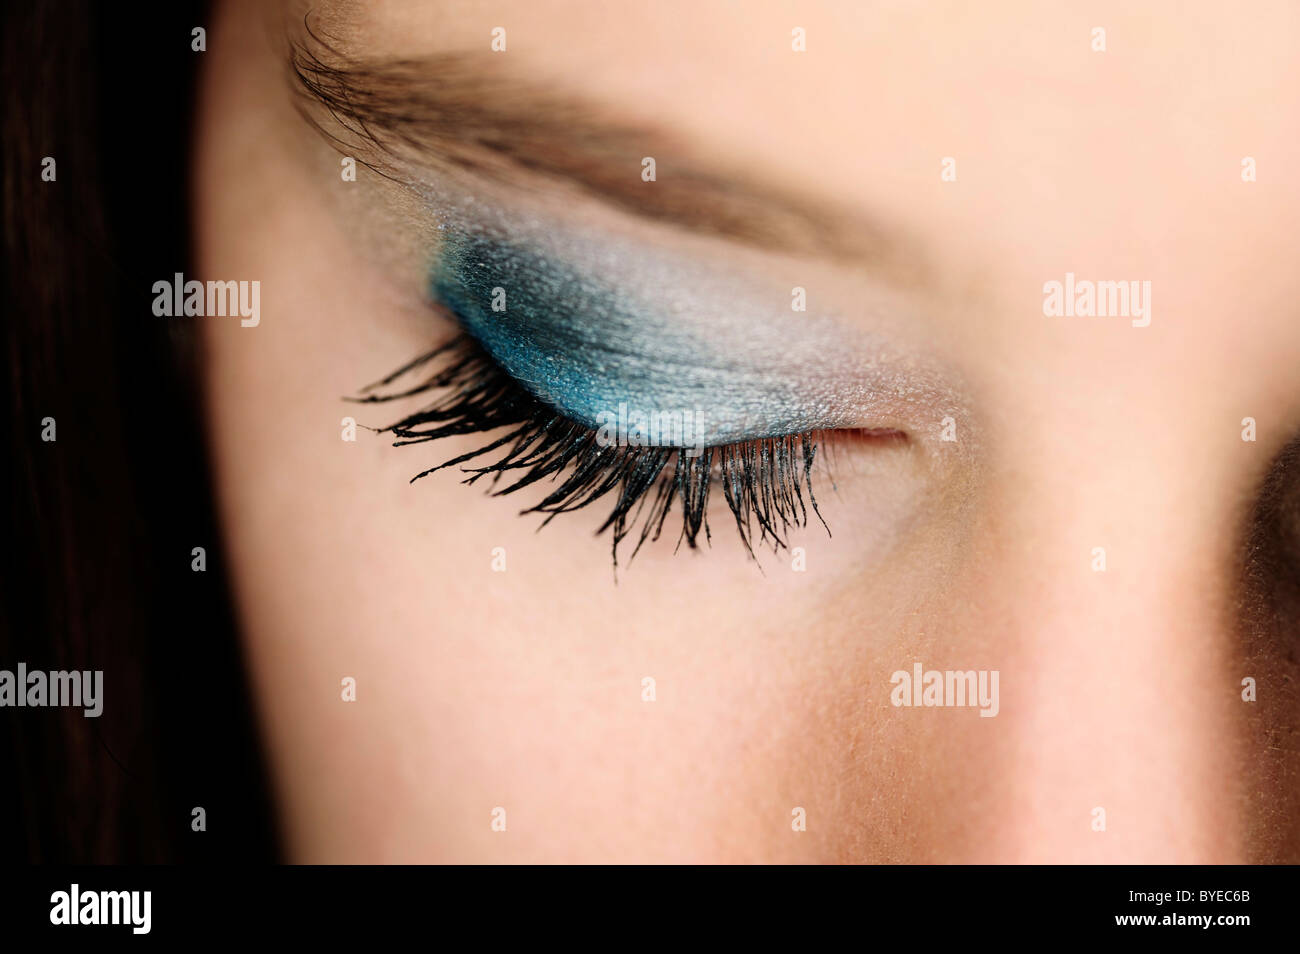 Woman's eye lid, woman wearing eye shadow Stock Photo